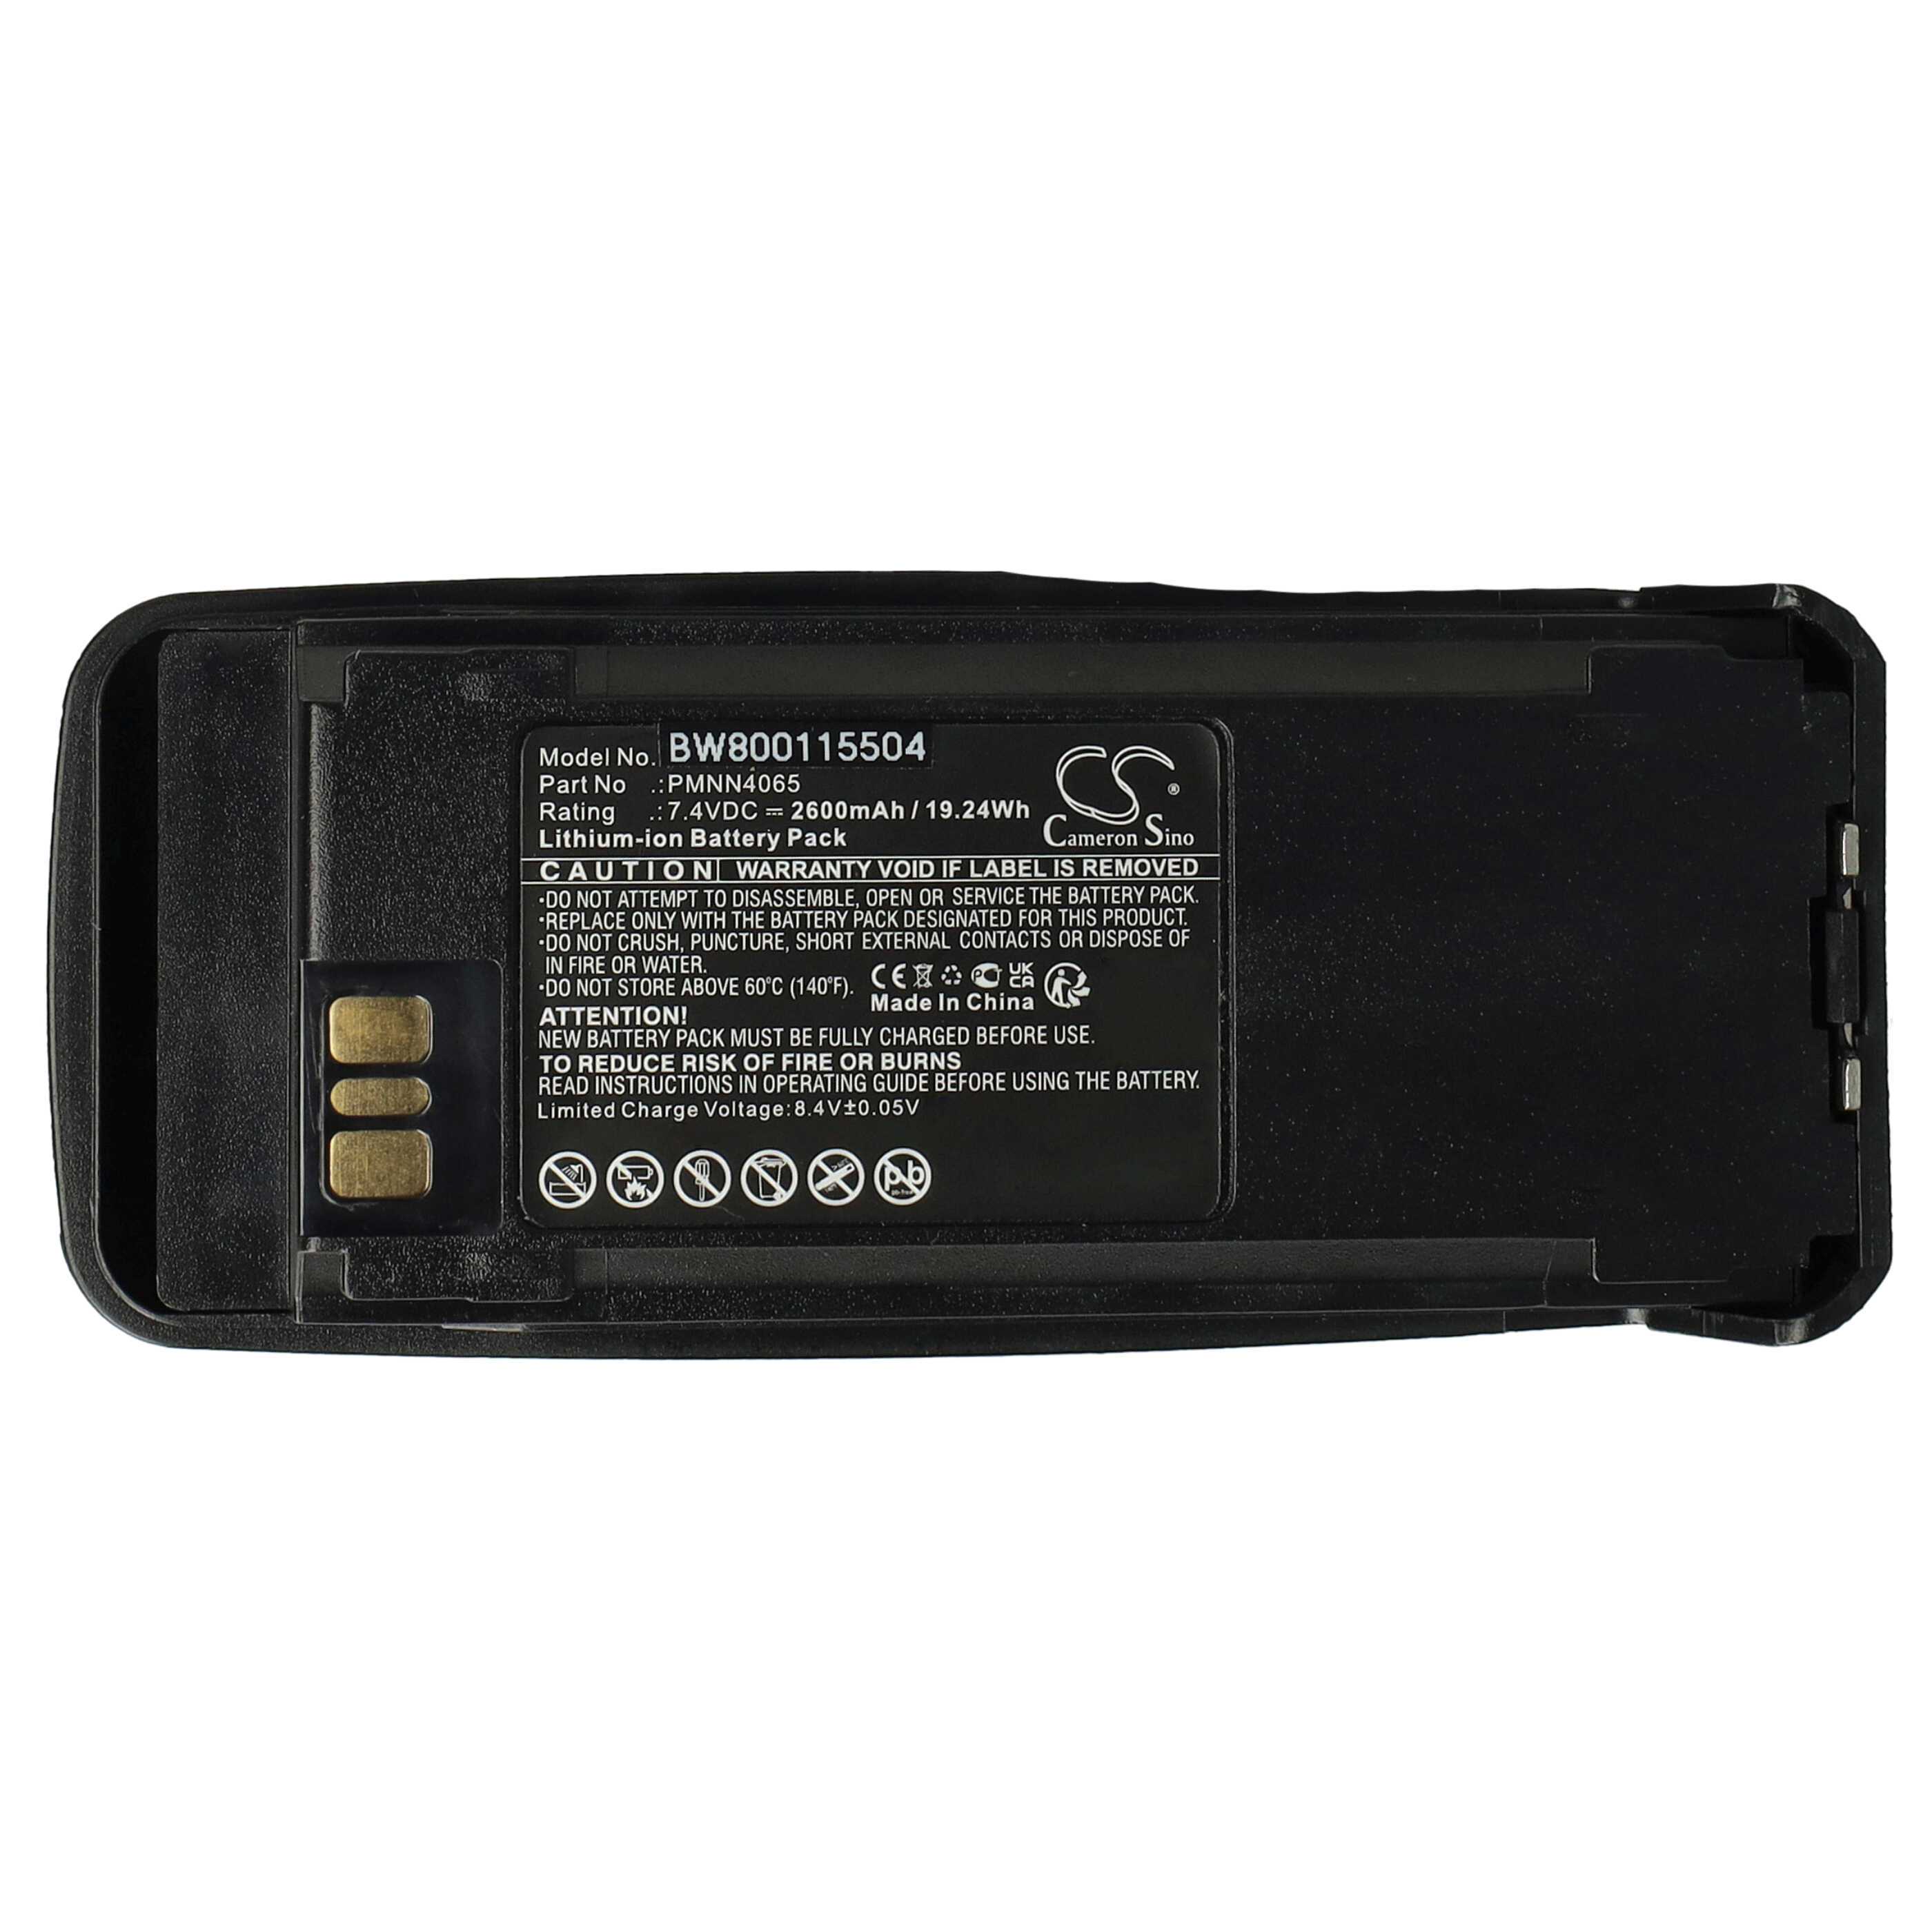 Radio Battery Replacement for Motorola NNTN4066, NNTN4077, NNTN4103 - 2600mAh 7.4V Li-Ion + Belt Clip